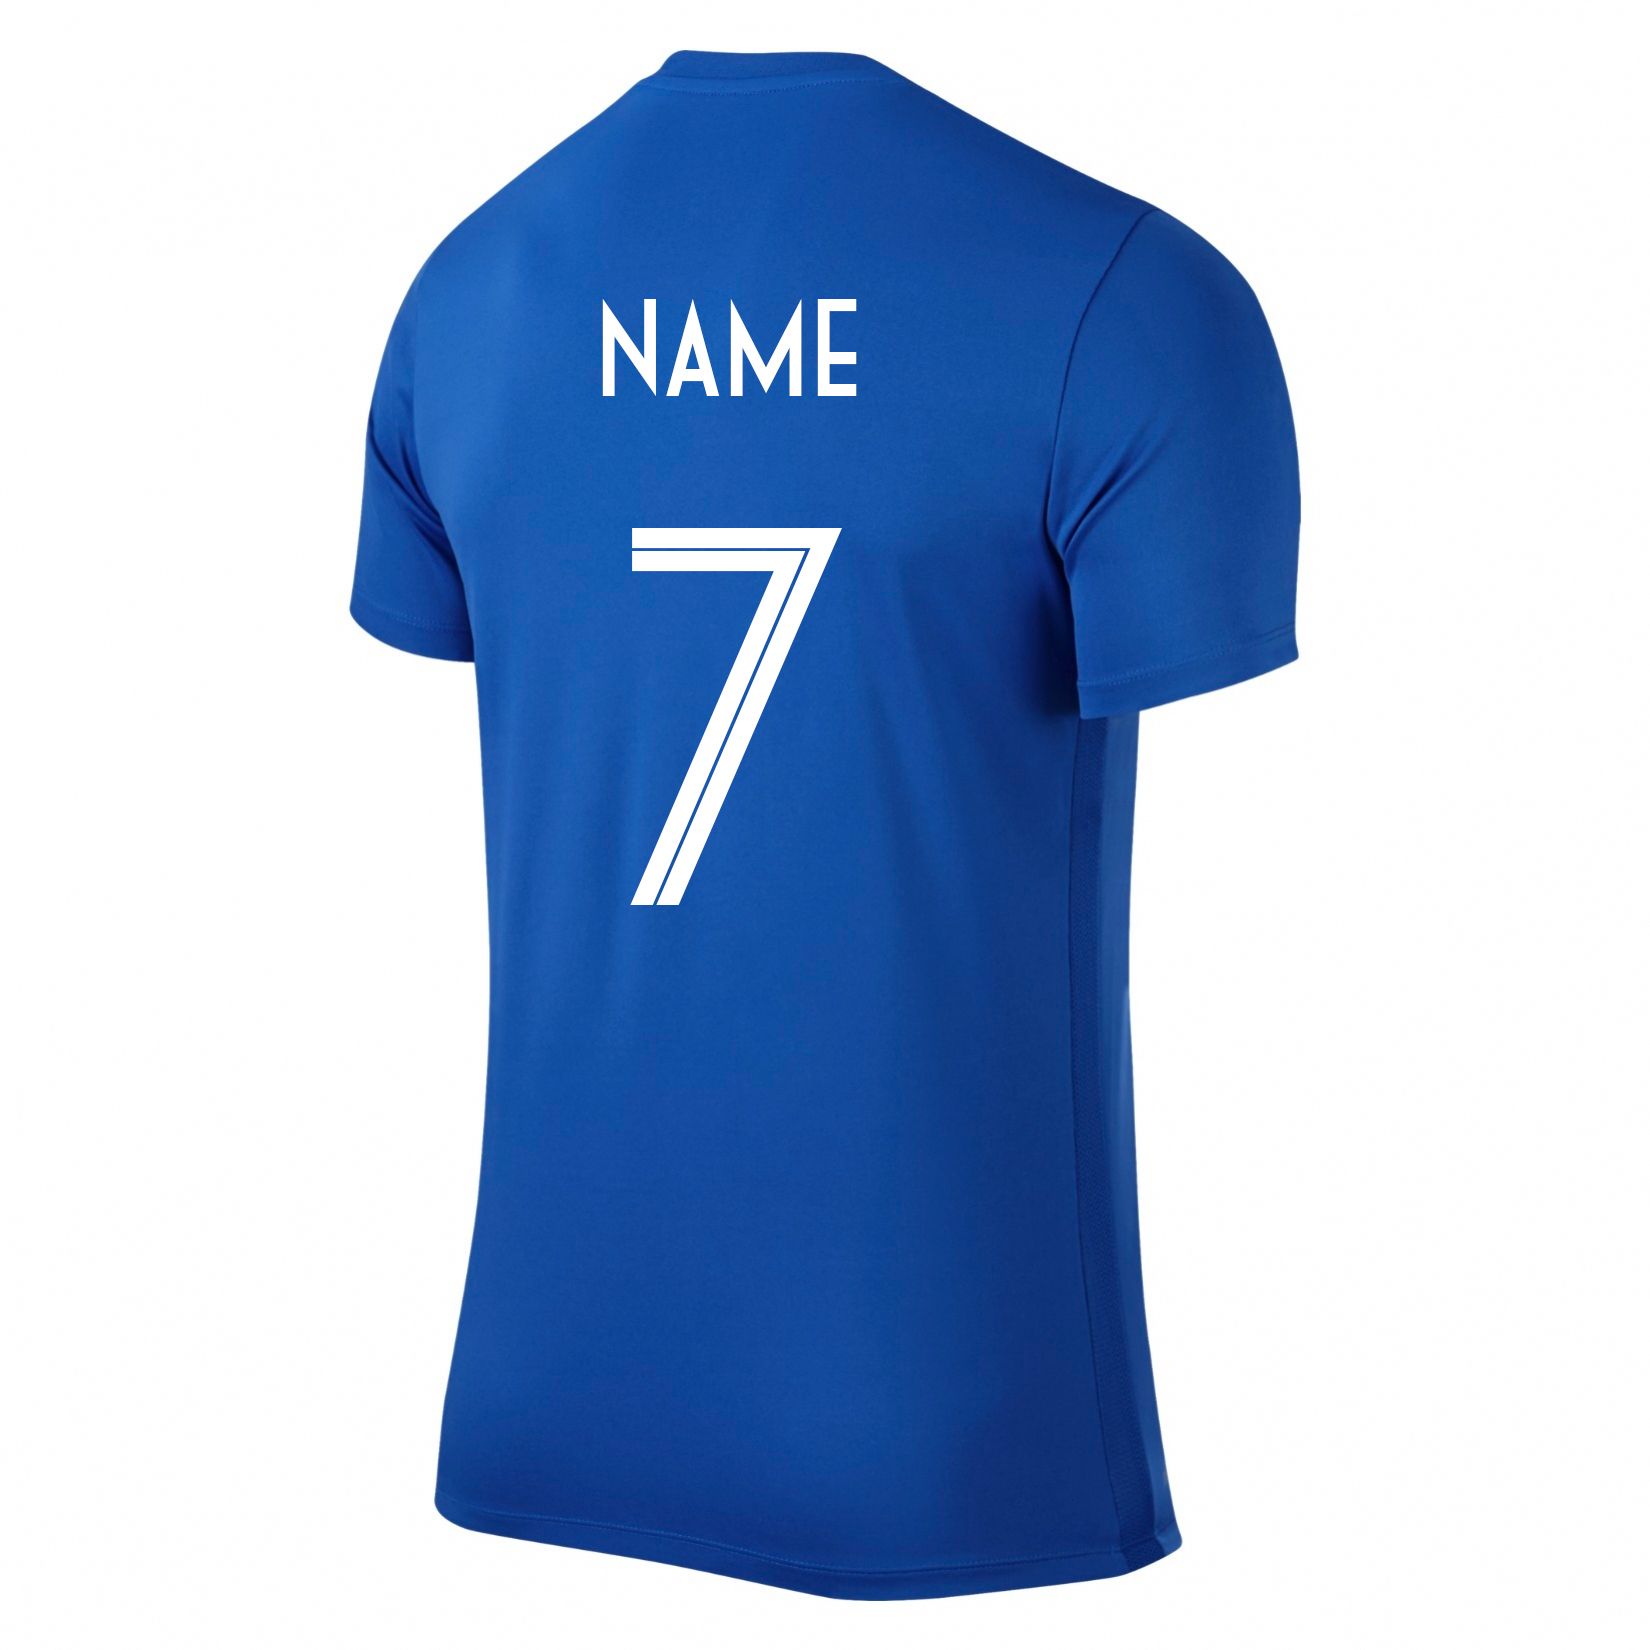 Nike Park VI Short Sleeve Shirt: Printed Name/Number - Kitlocker.com